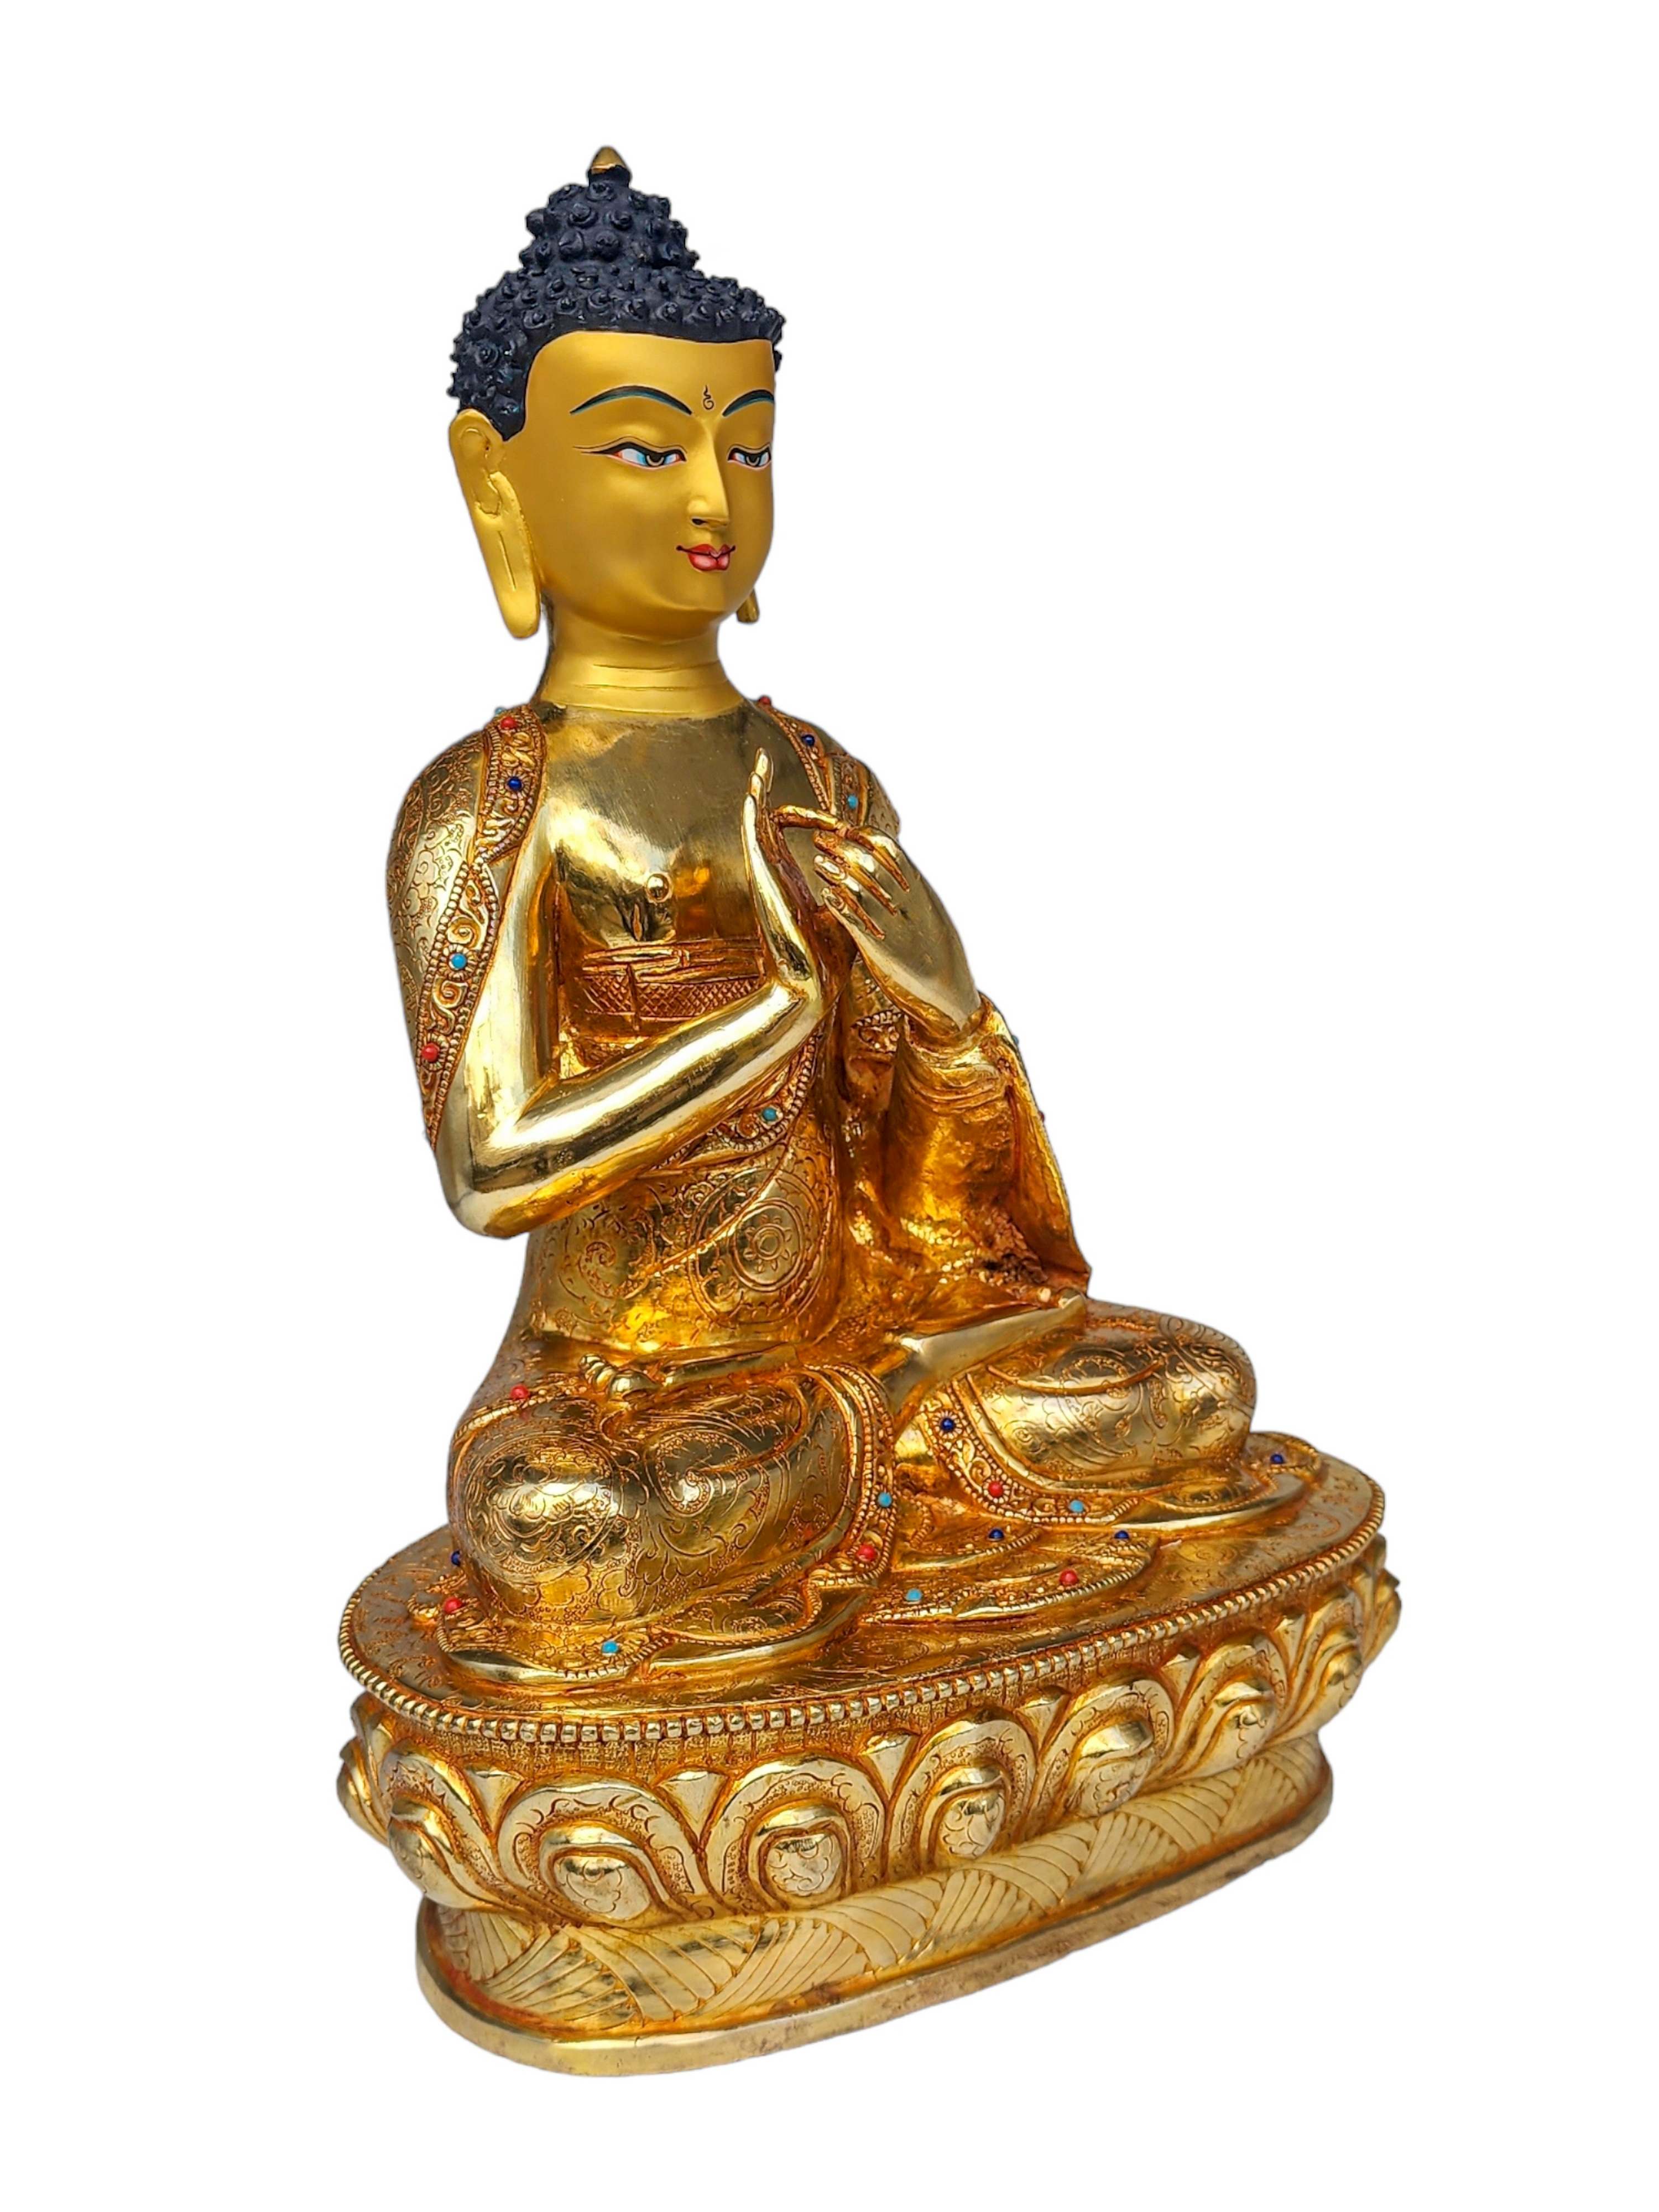 vairochana Buddha, Buddhist Handmade Statue, face Painted, gold Plated And stone Setting